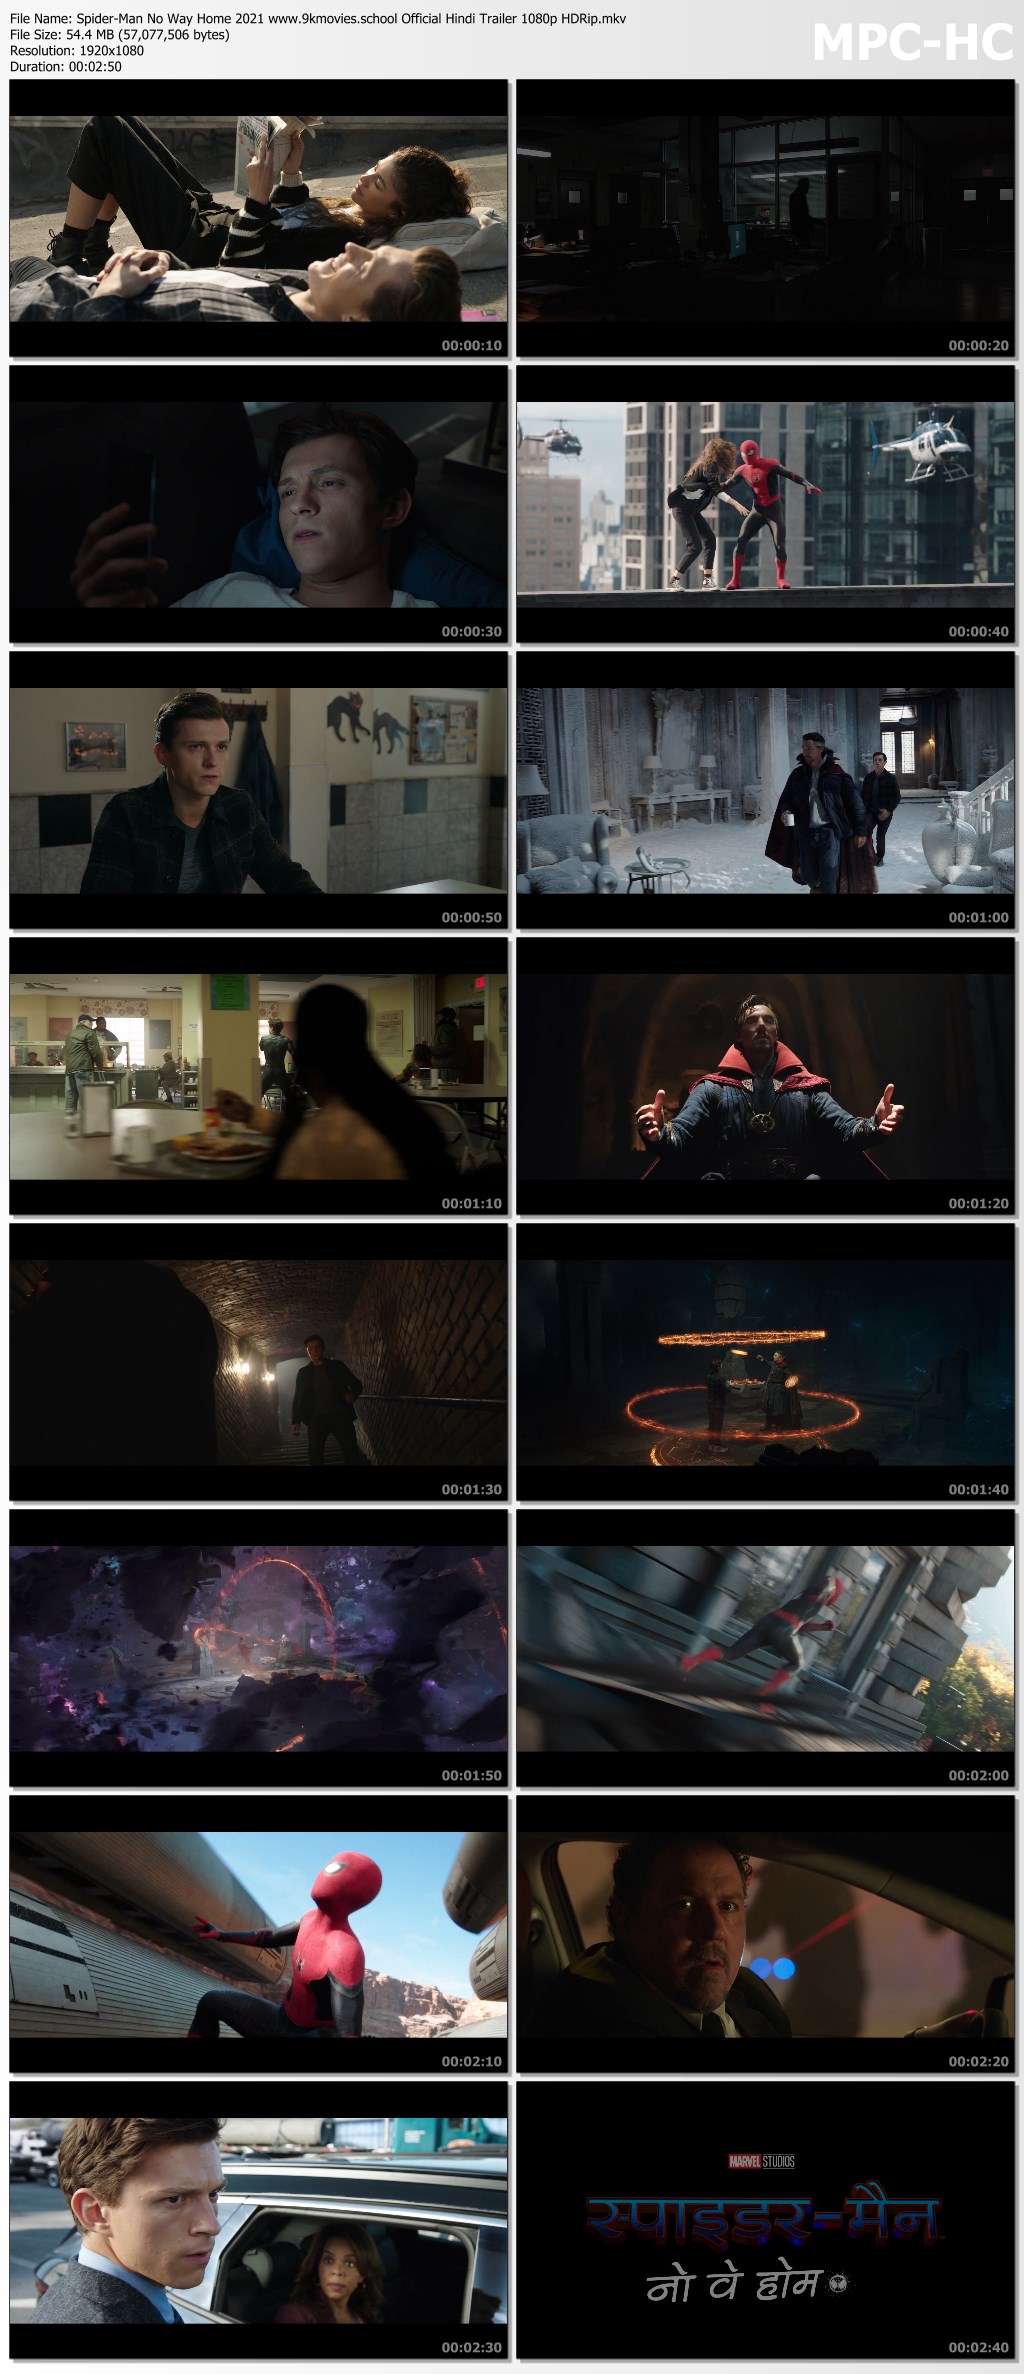 Spider-Man No Way Home 2021 Hindi Dubbed Official Trailer 1080p HDRip